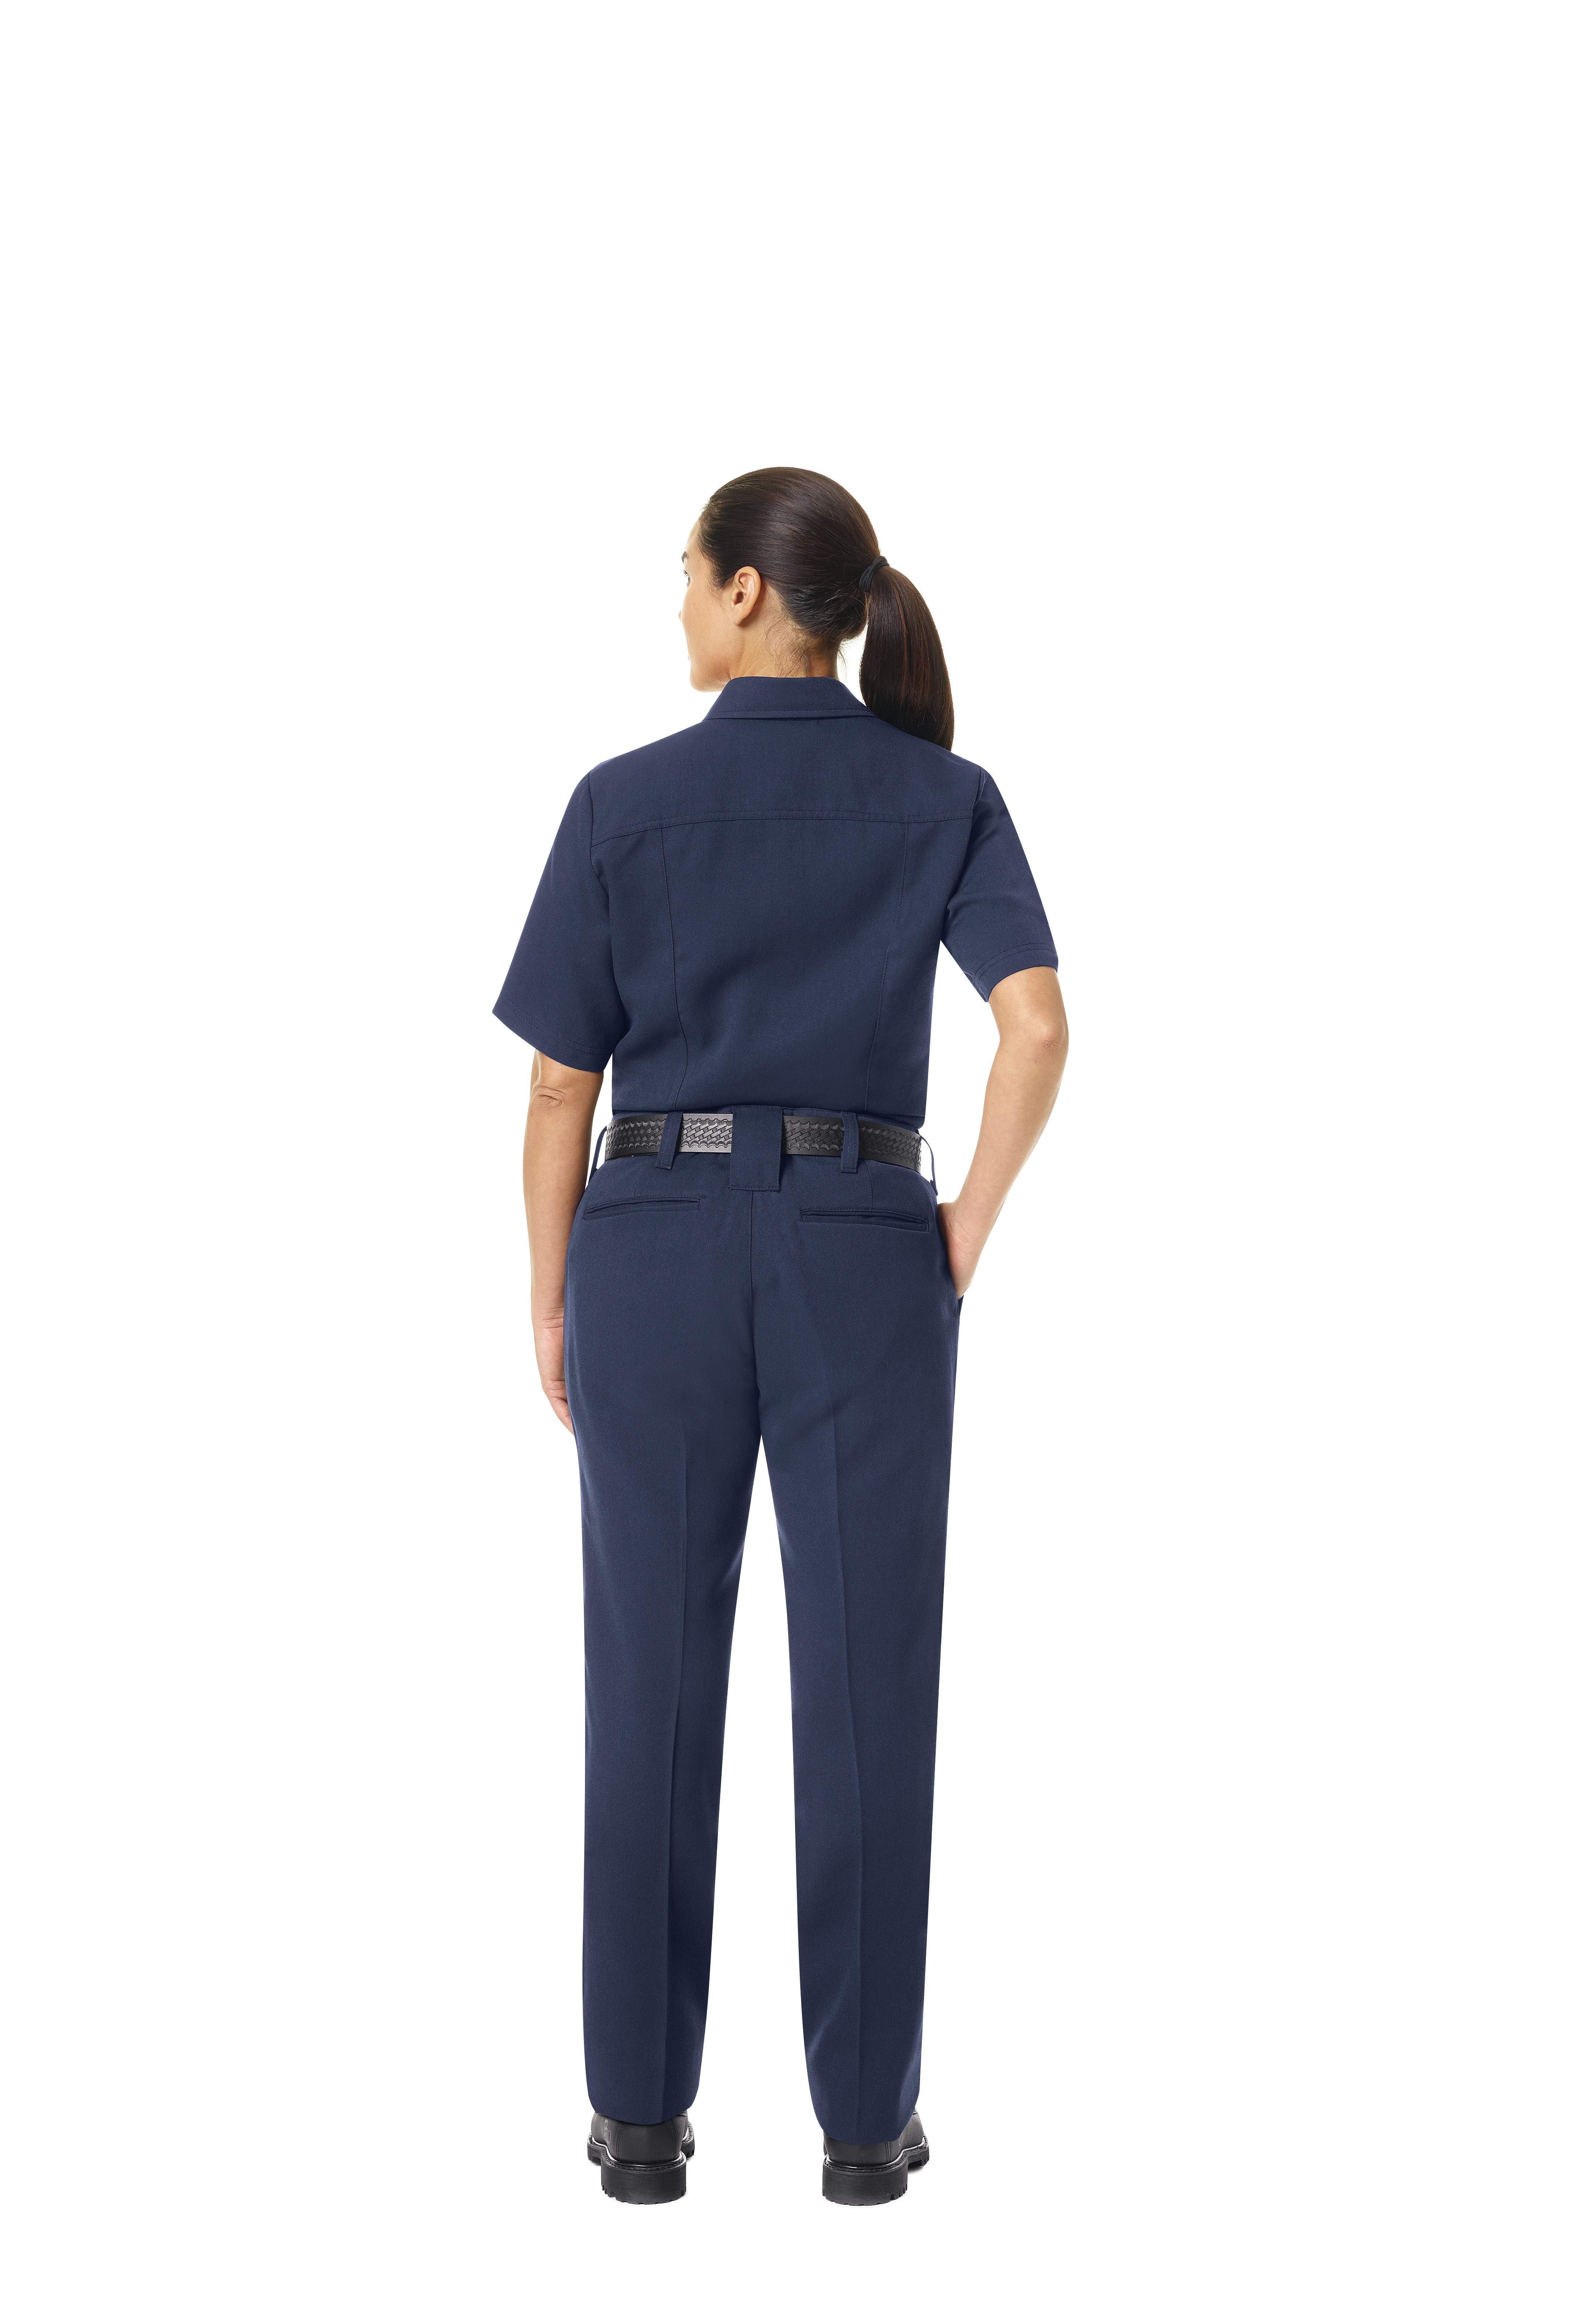 Security Guard Pants | Security Uniform Pants| Propper.com